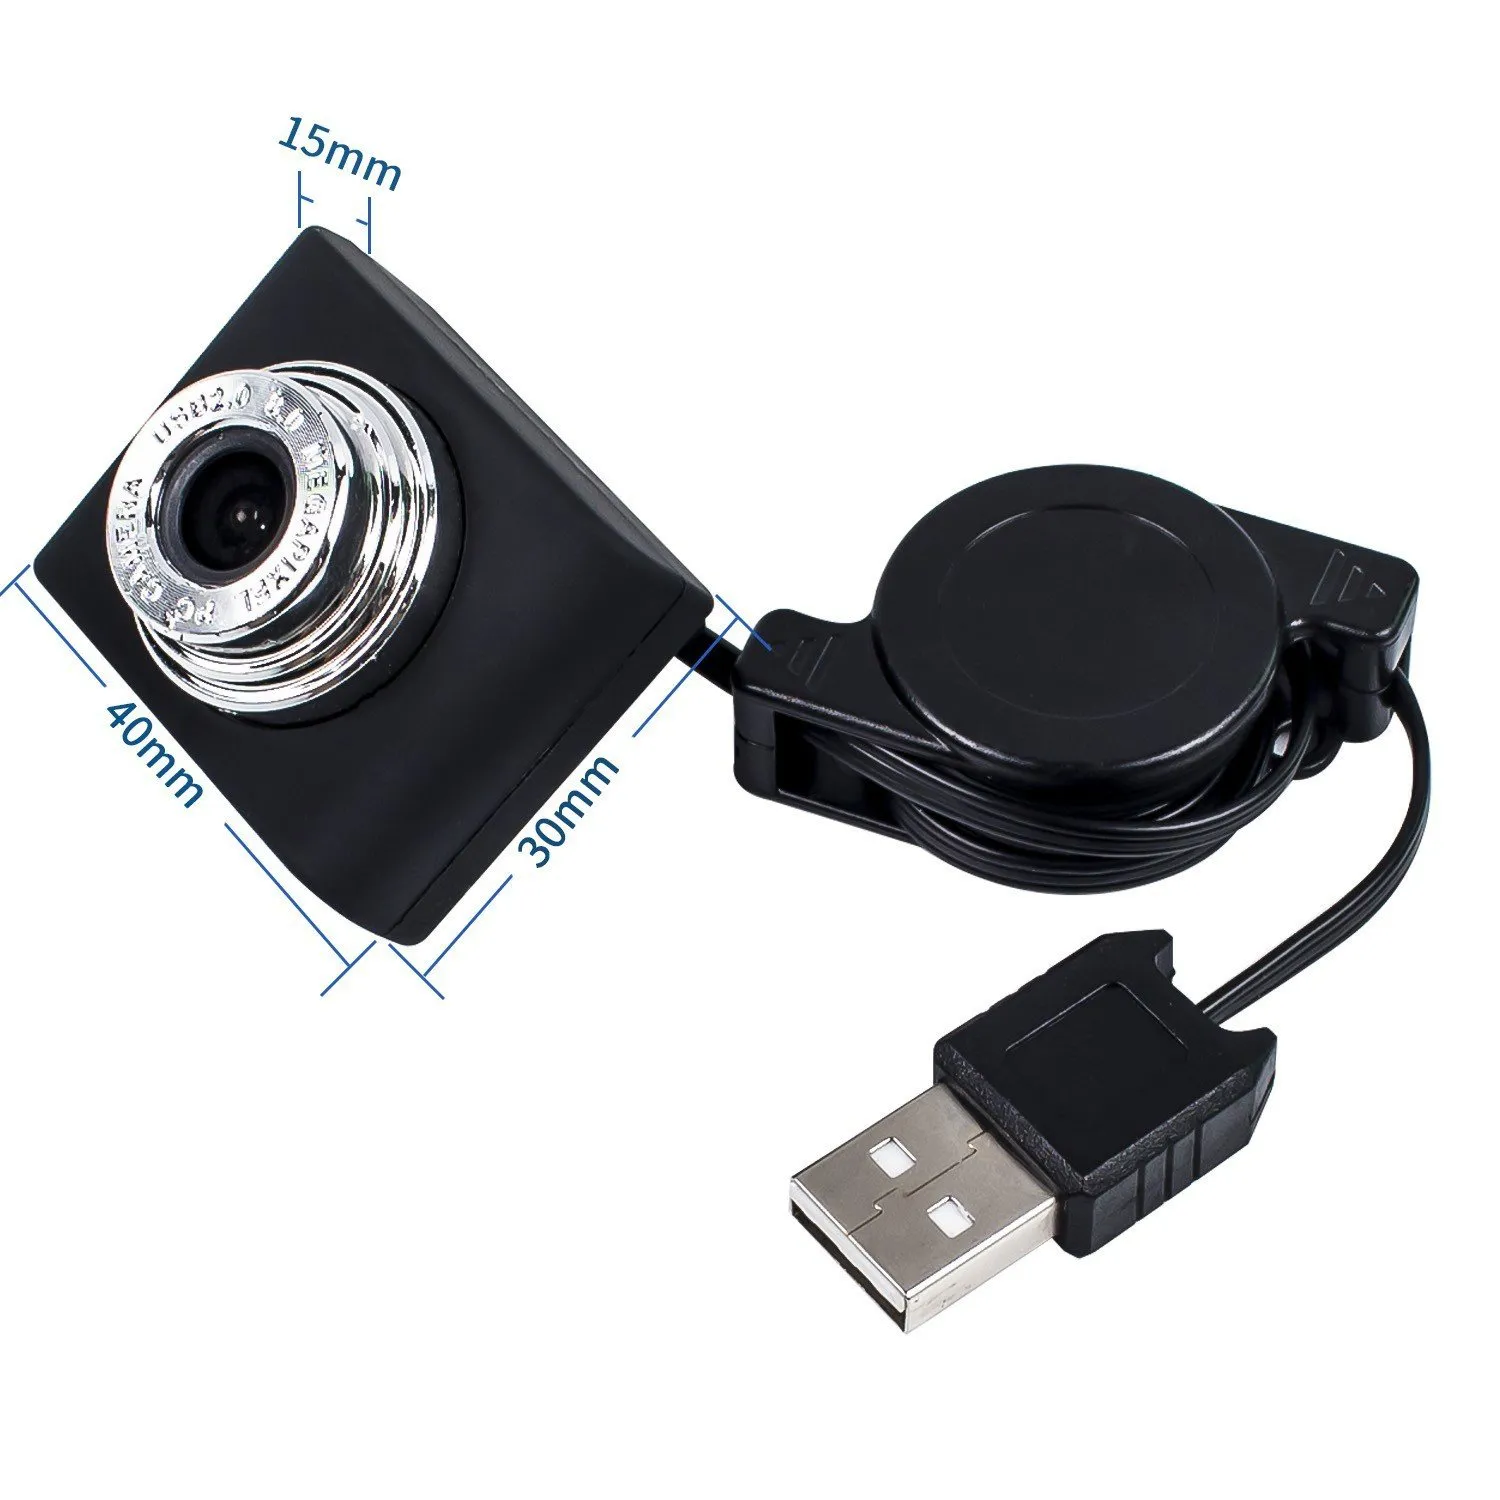 SunFounder Raspberry Pi Free Driver USB 2.0 Camera 300k Pixels Lens 1/4 CMOS 640x480 Resolution for Linux/Mac/Windows Etc. 